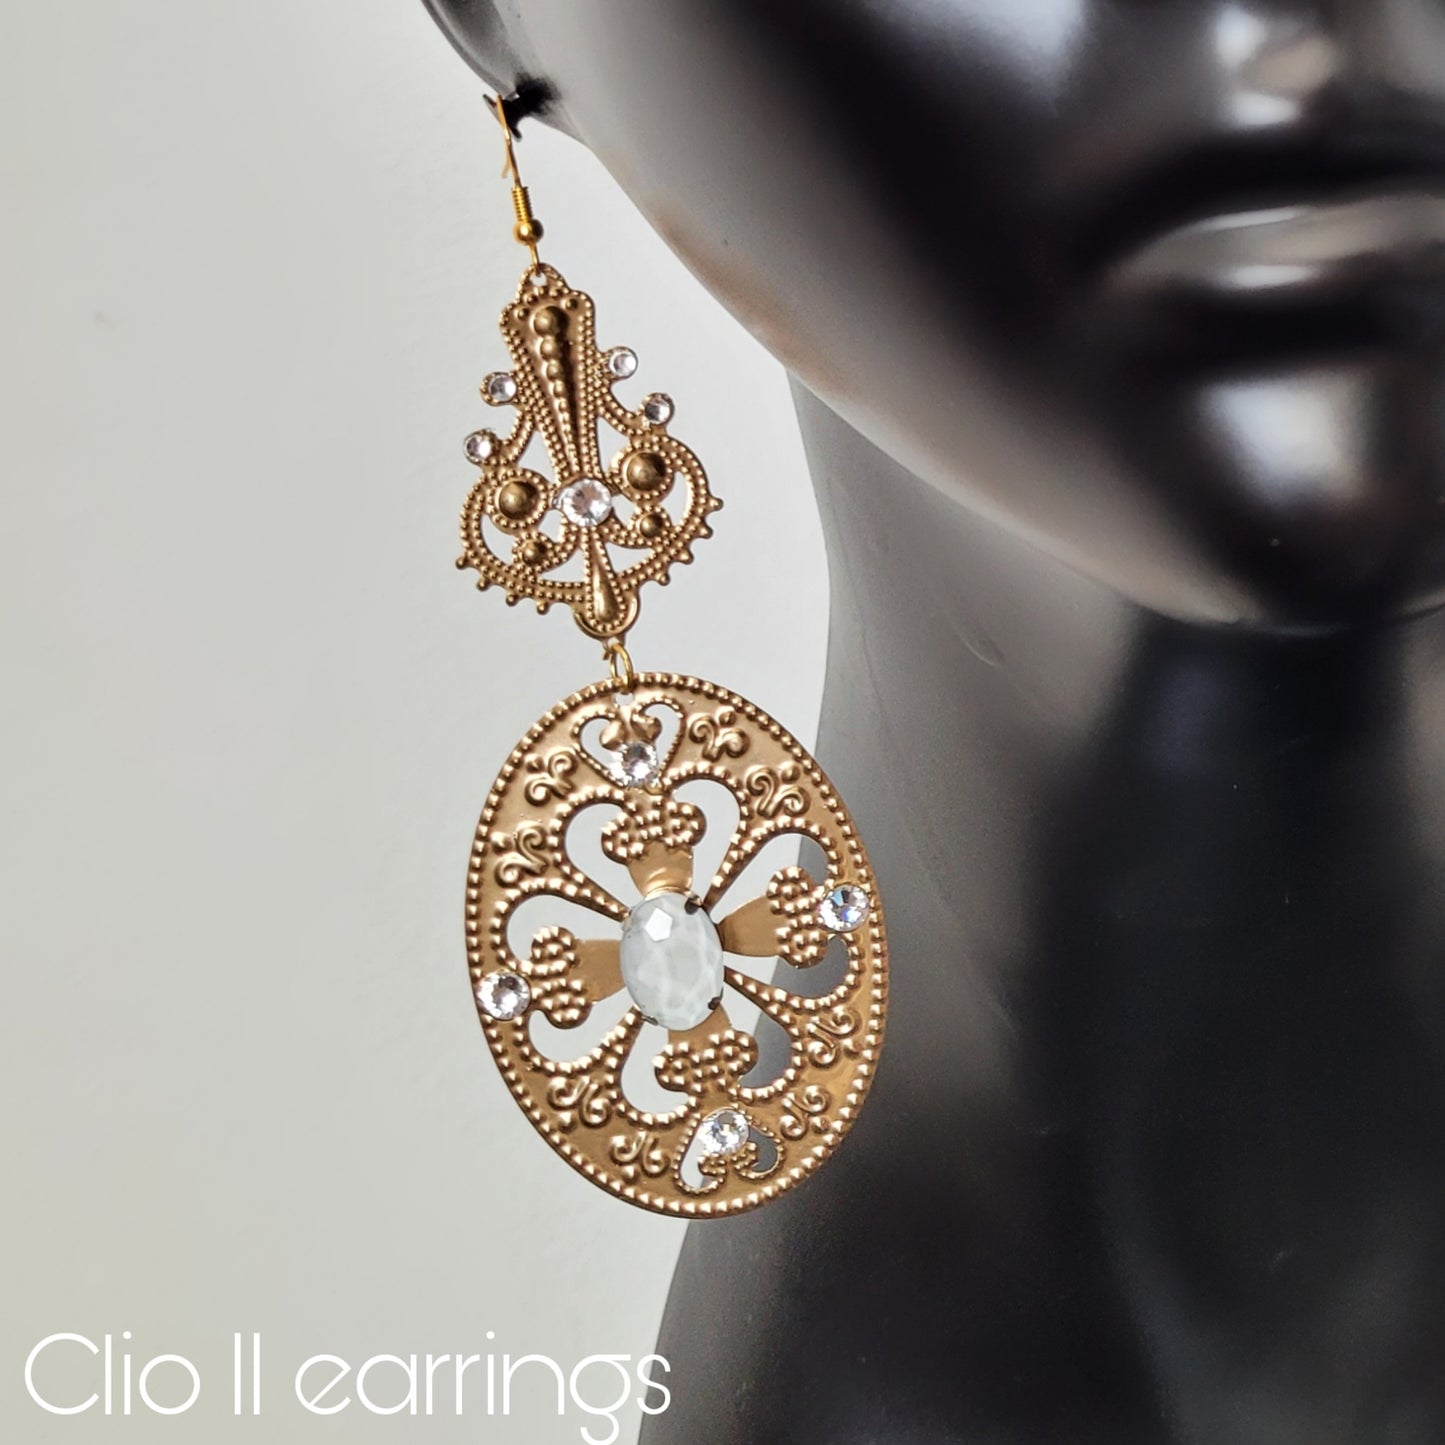 Deusa ex Machina collection: The Clio earrings